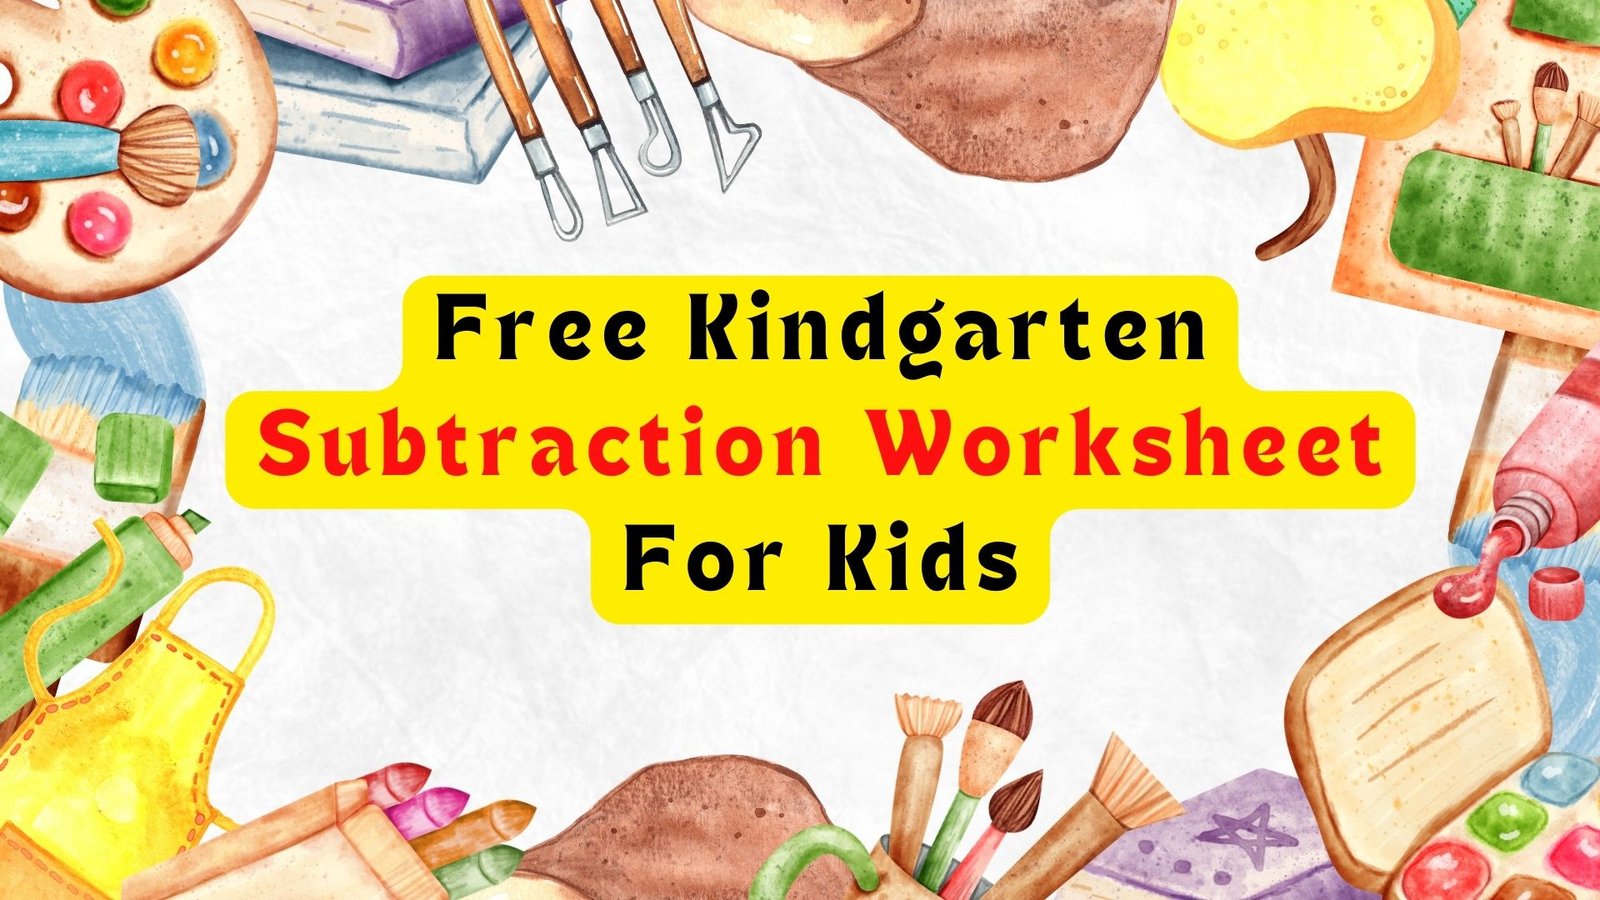 Free Kindgarten Subtraction Worksheet For Kids